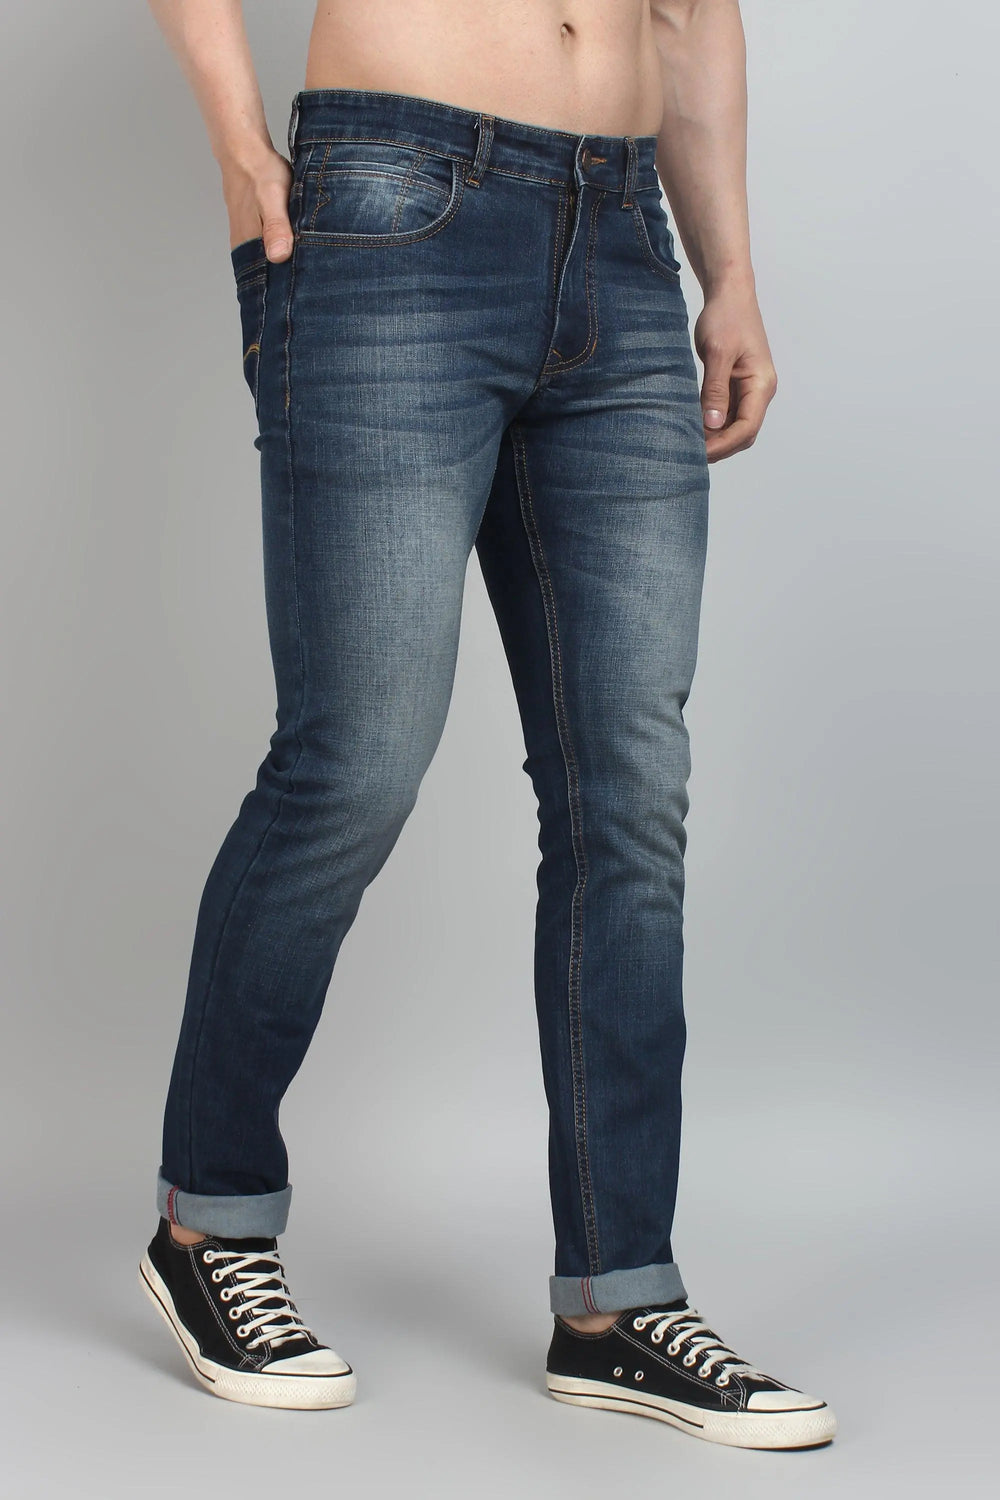 Slim Fit Grey Shade Blue Premium Men's Denim Jeans - Peplos Jeans 